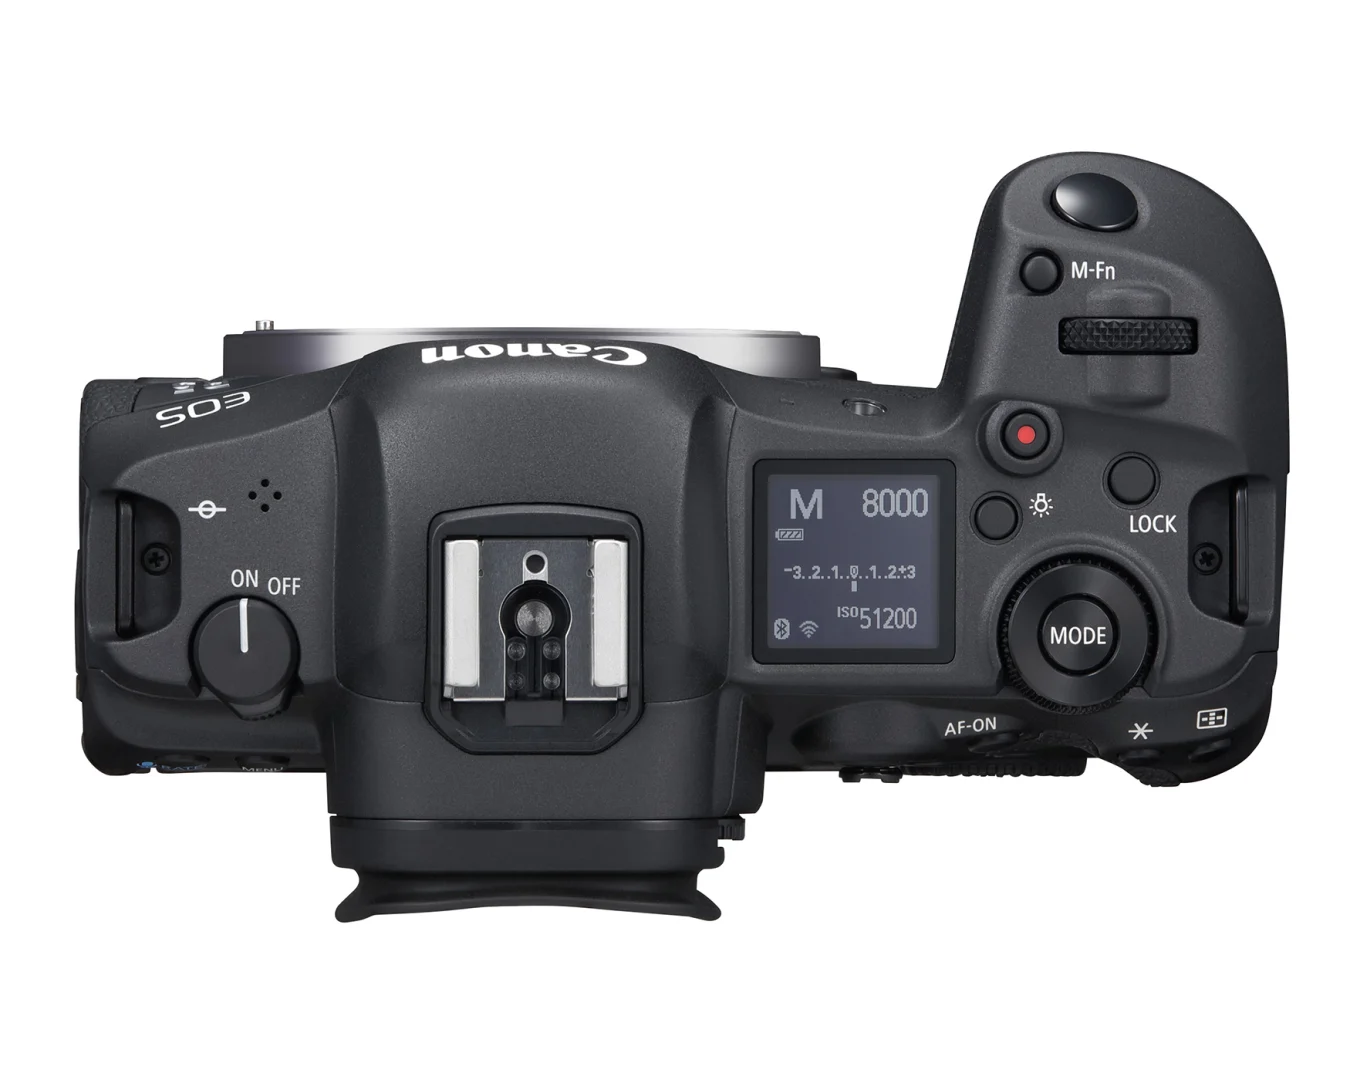 Canon EOS R5 full-frame mirrorless camera